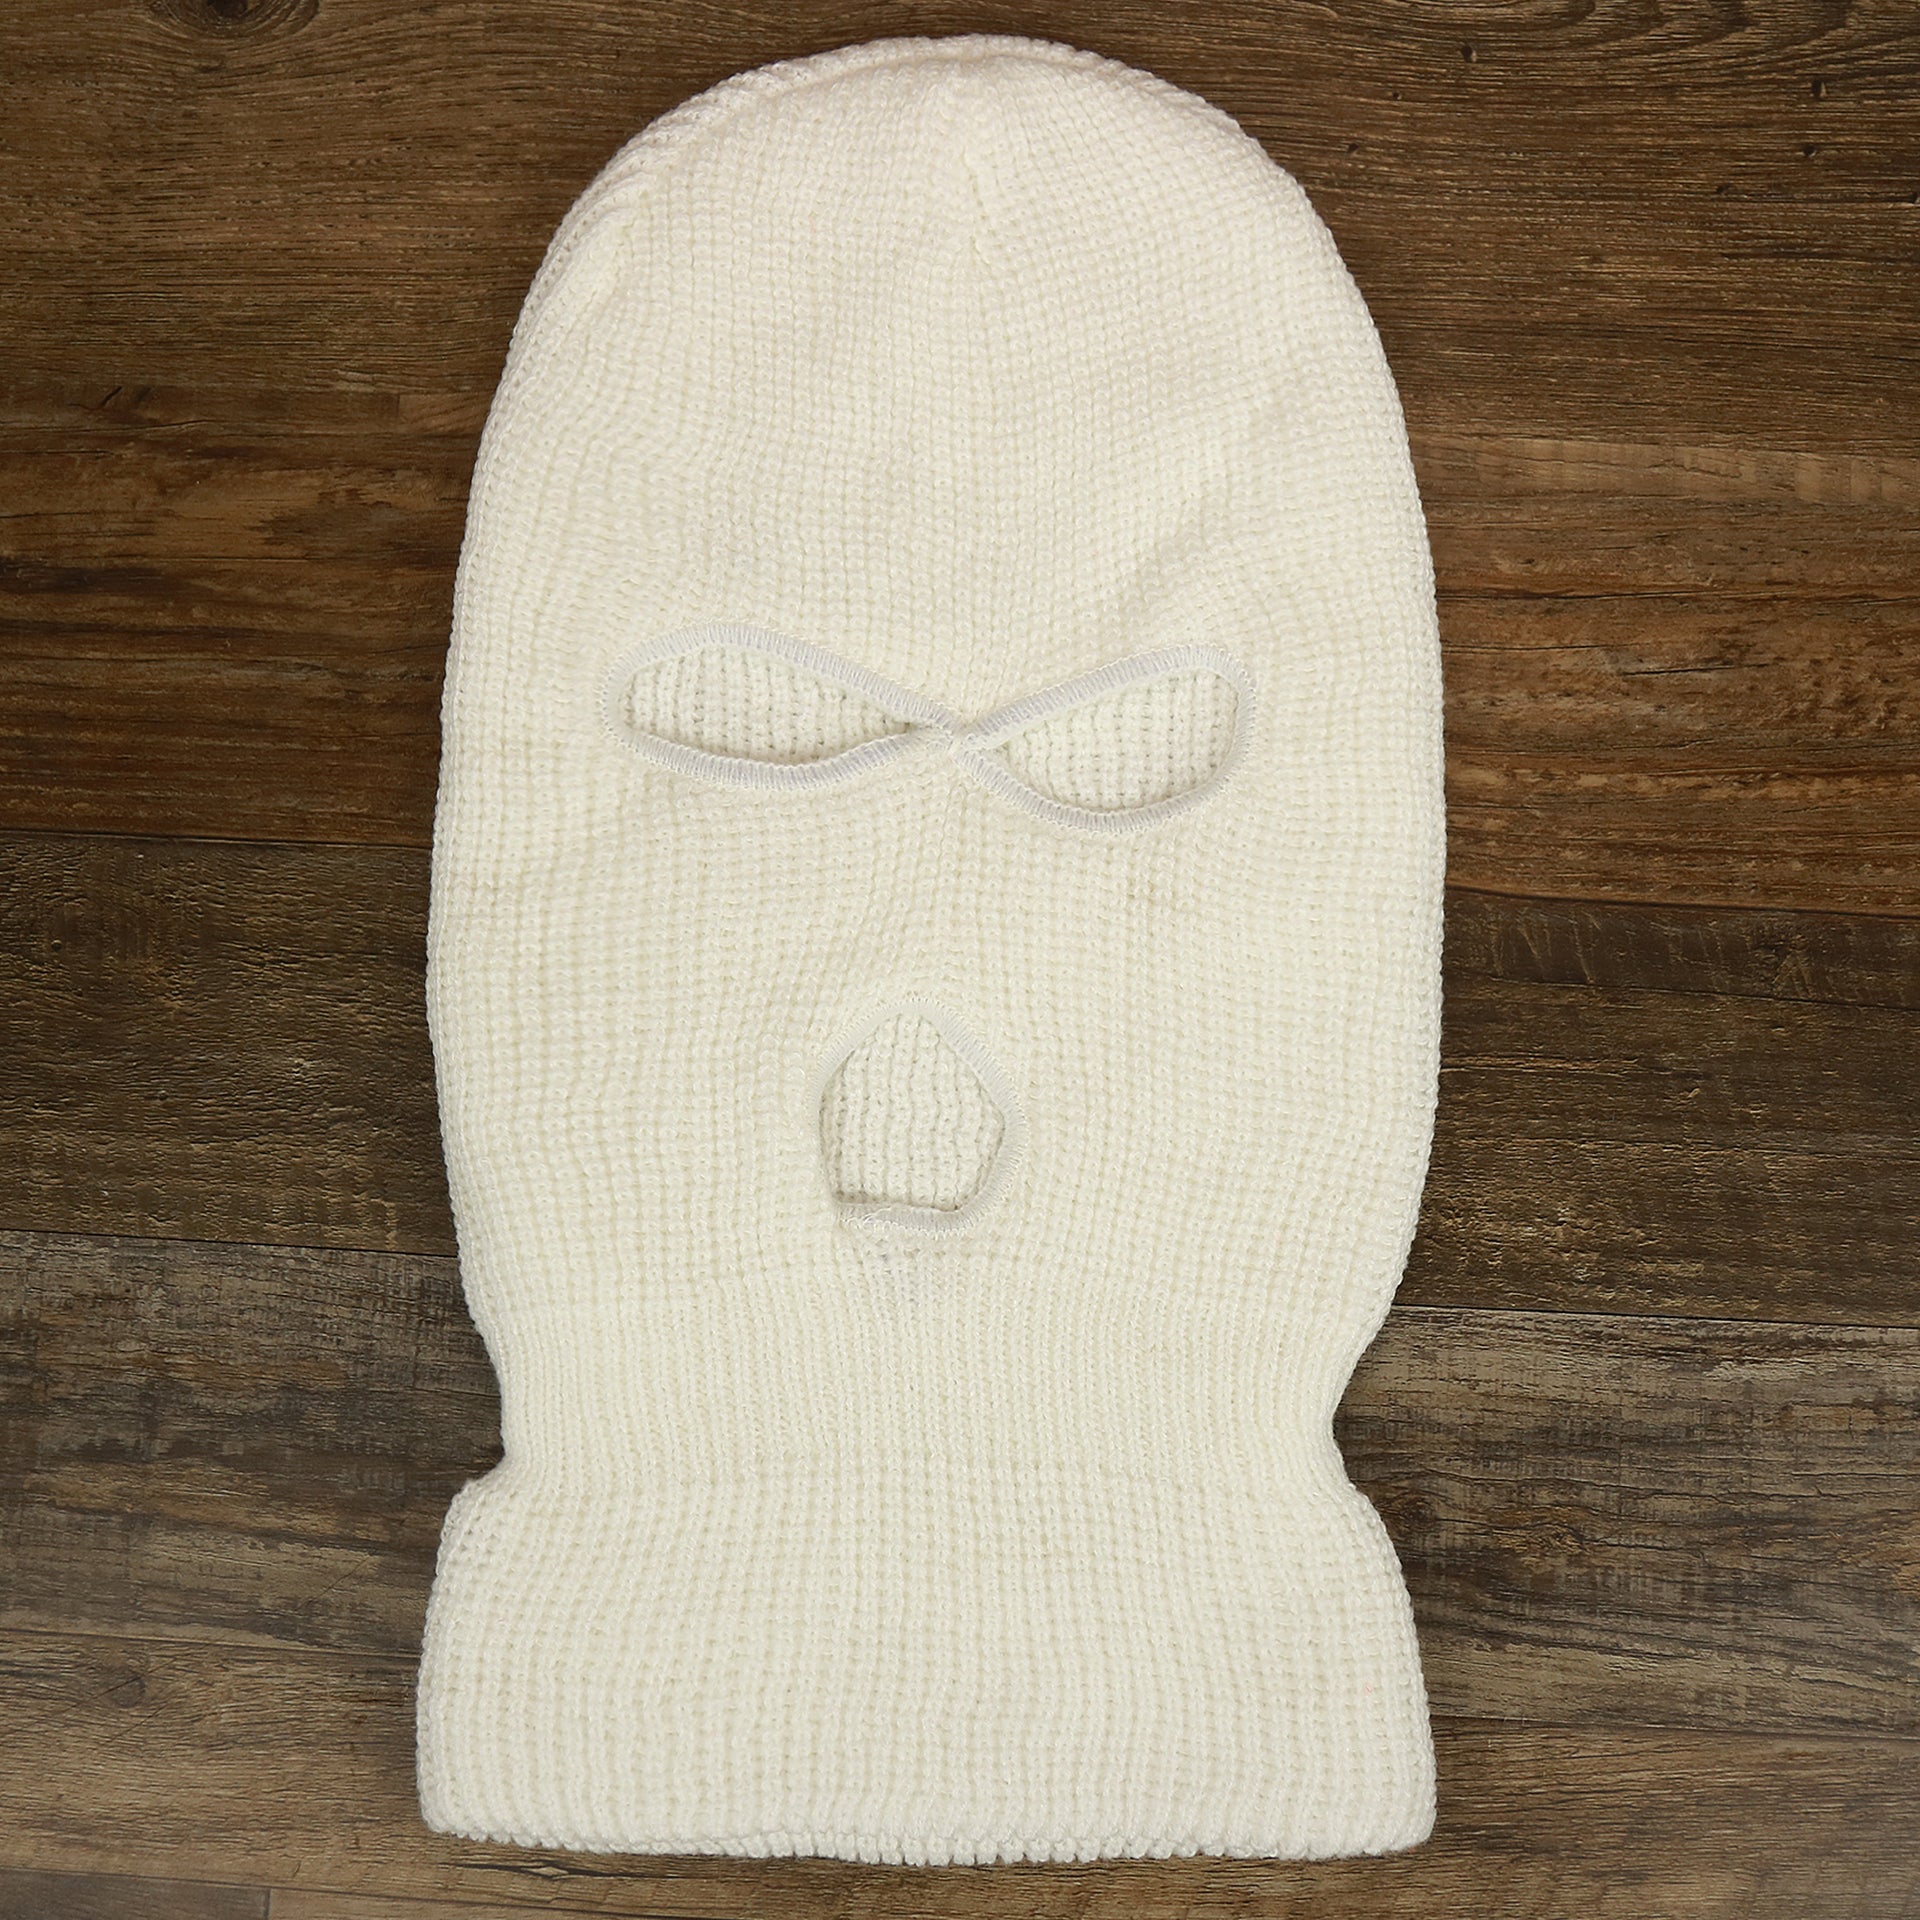 The White Snug Fit Three Hole Balaclava | White Knit Ski Mask on the ground